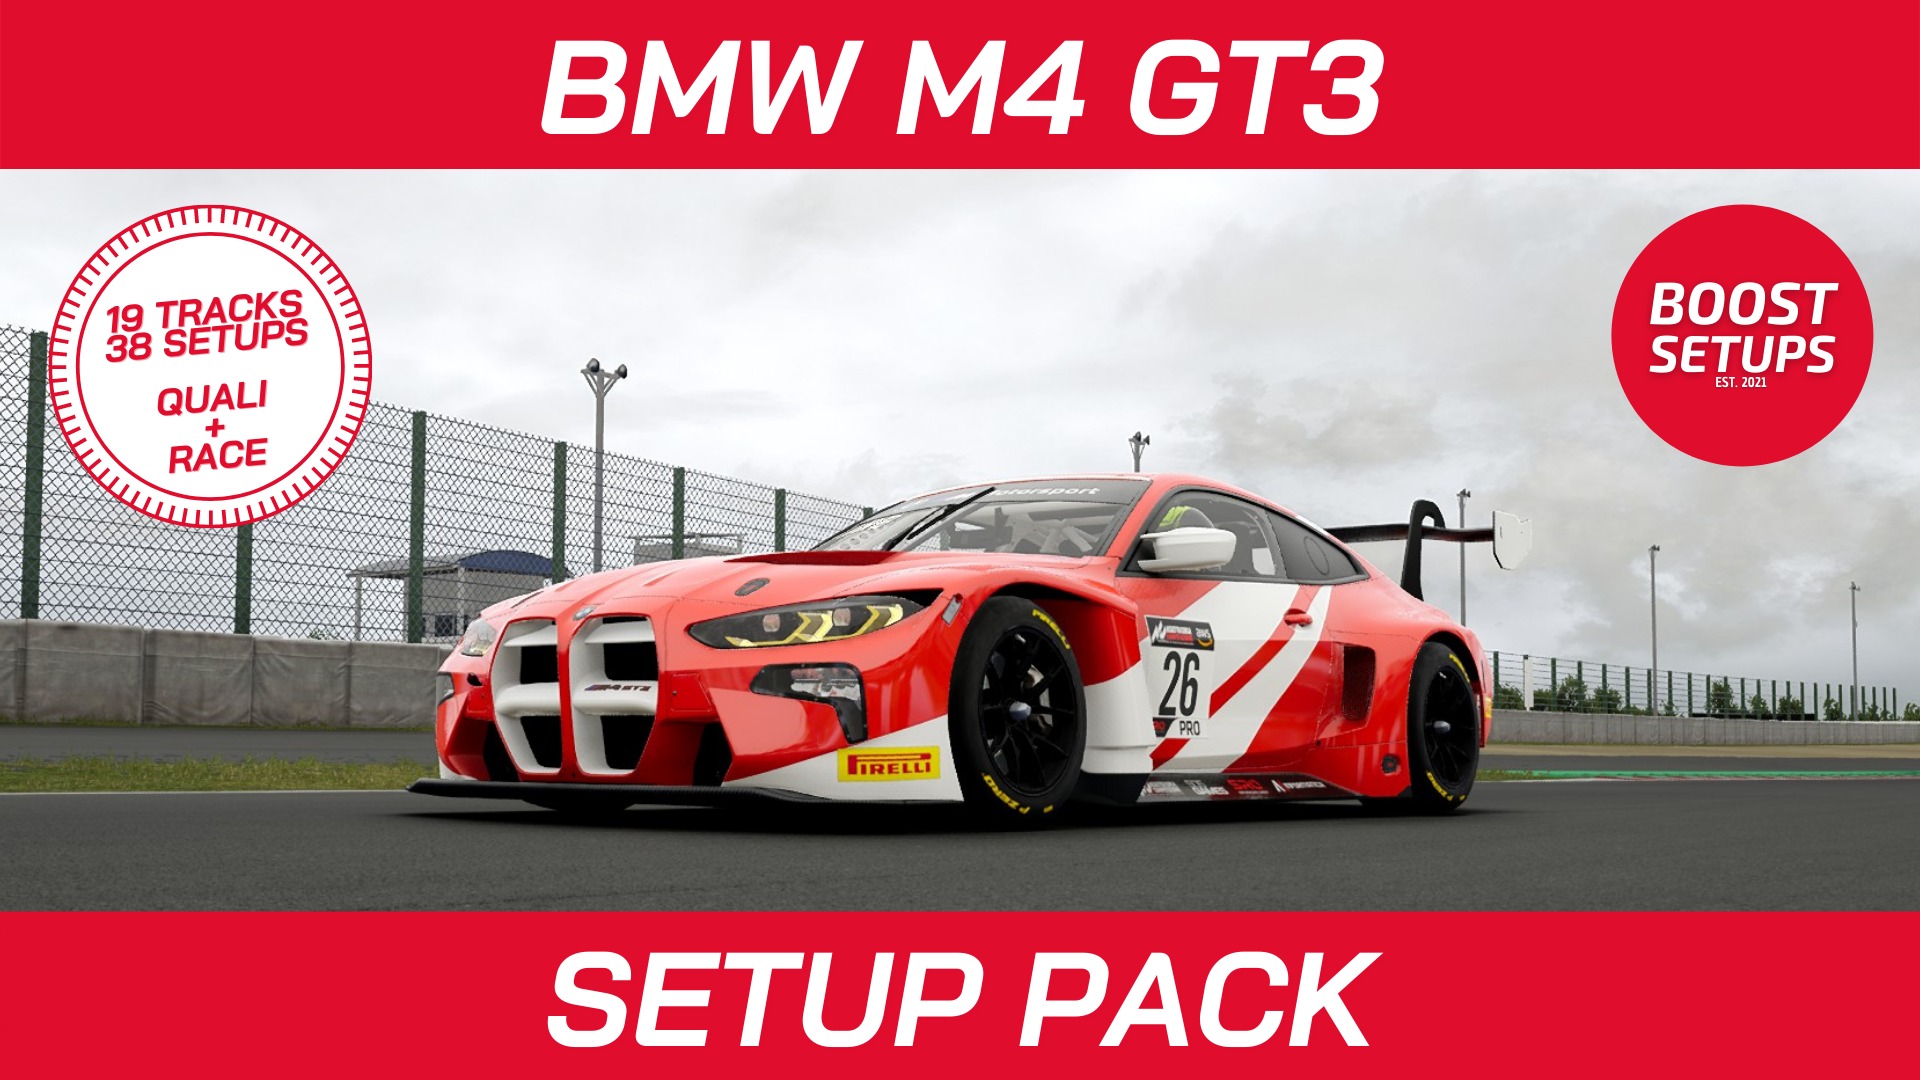 Bmw M4 Gt3 Qualirace Setup Pack Share Your Car Setups And Create